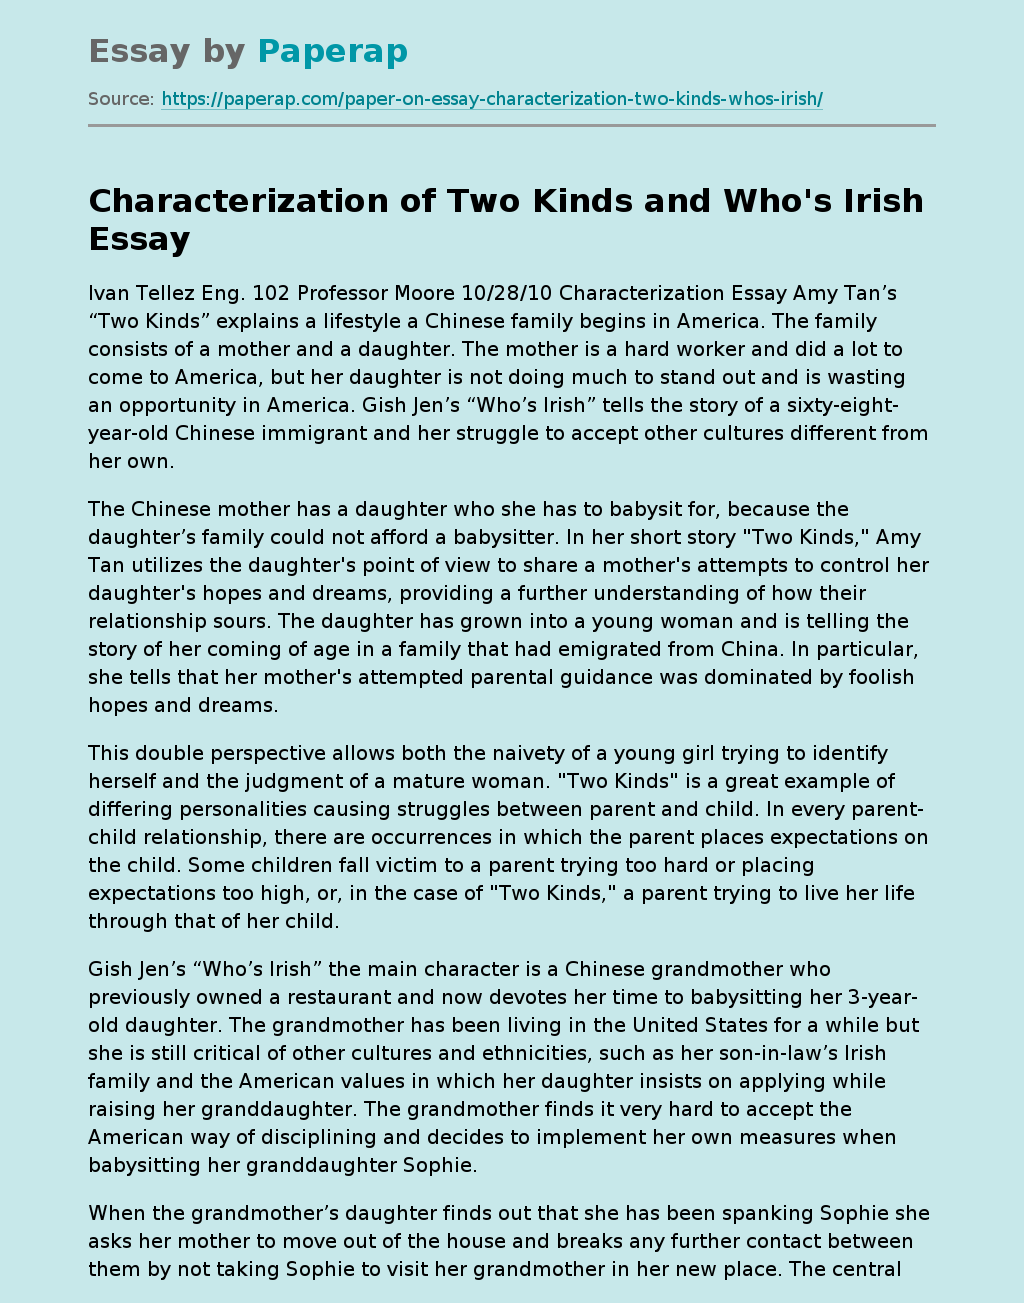 Characterization of Two Kinds and Who's Irish